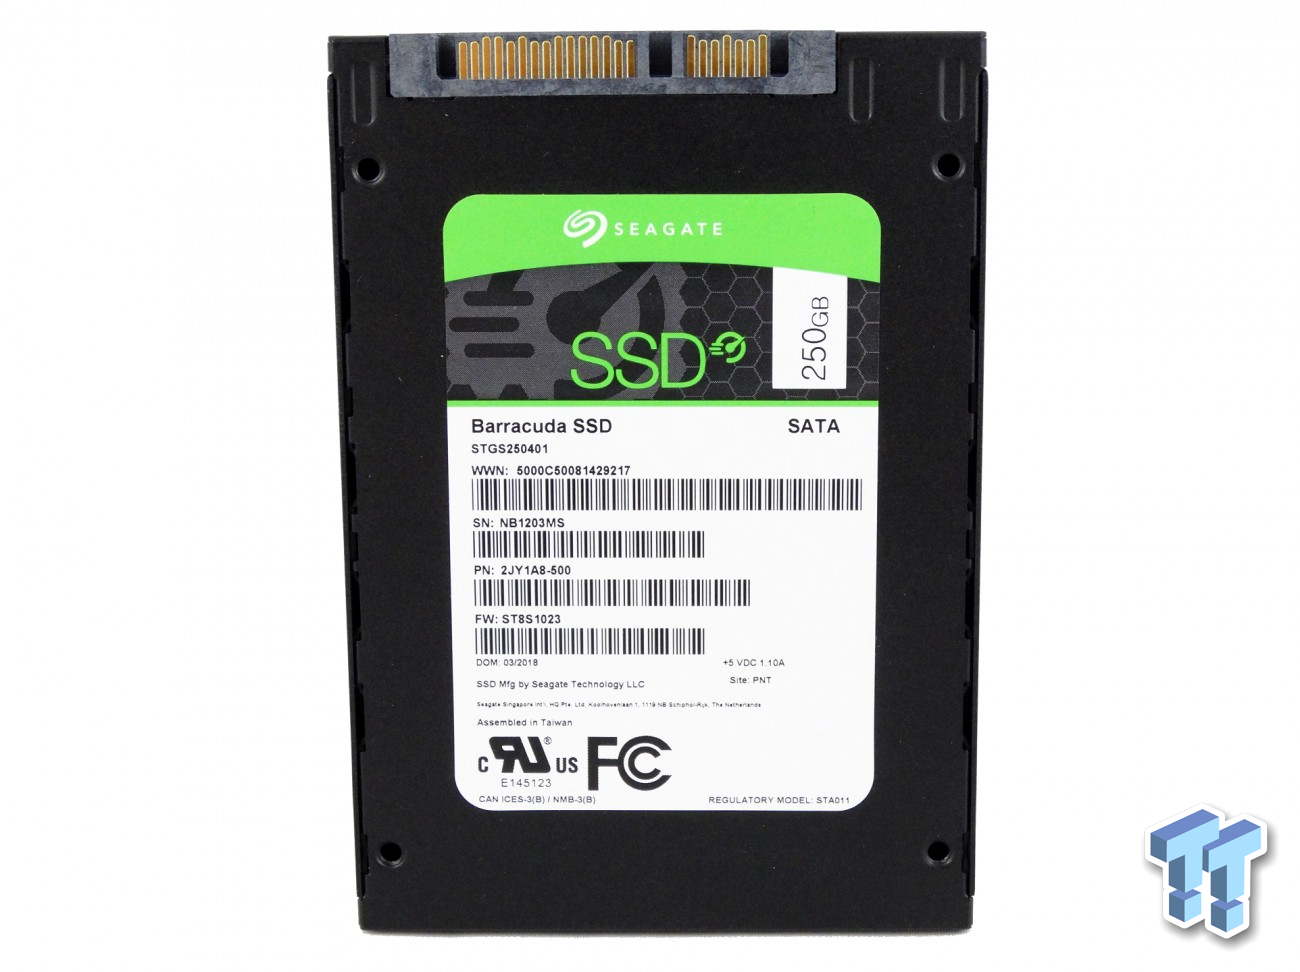 Barracuda SSD - Rehashing Server Storage